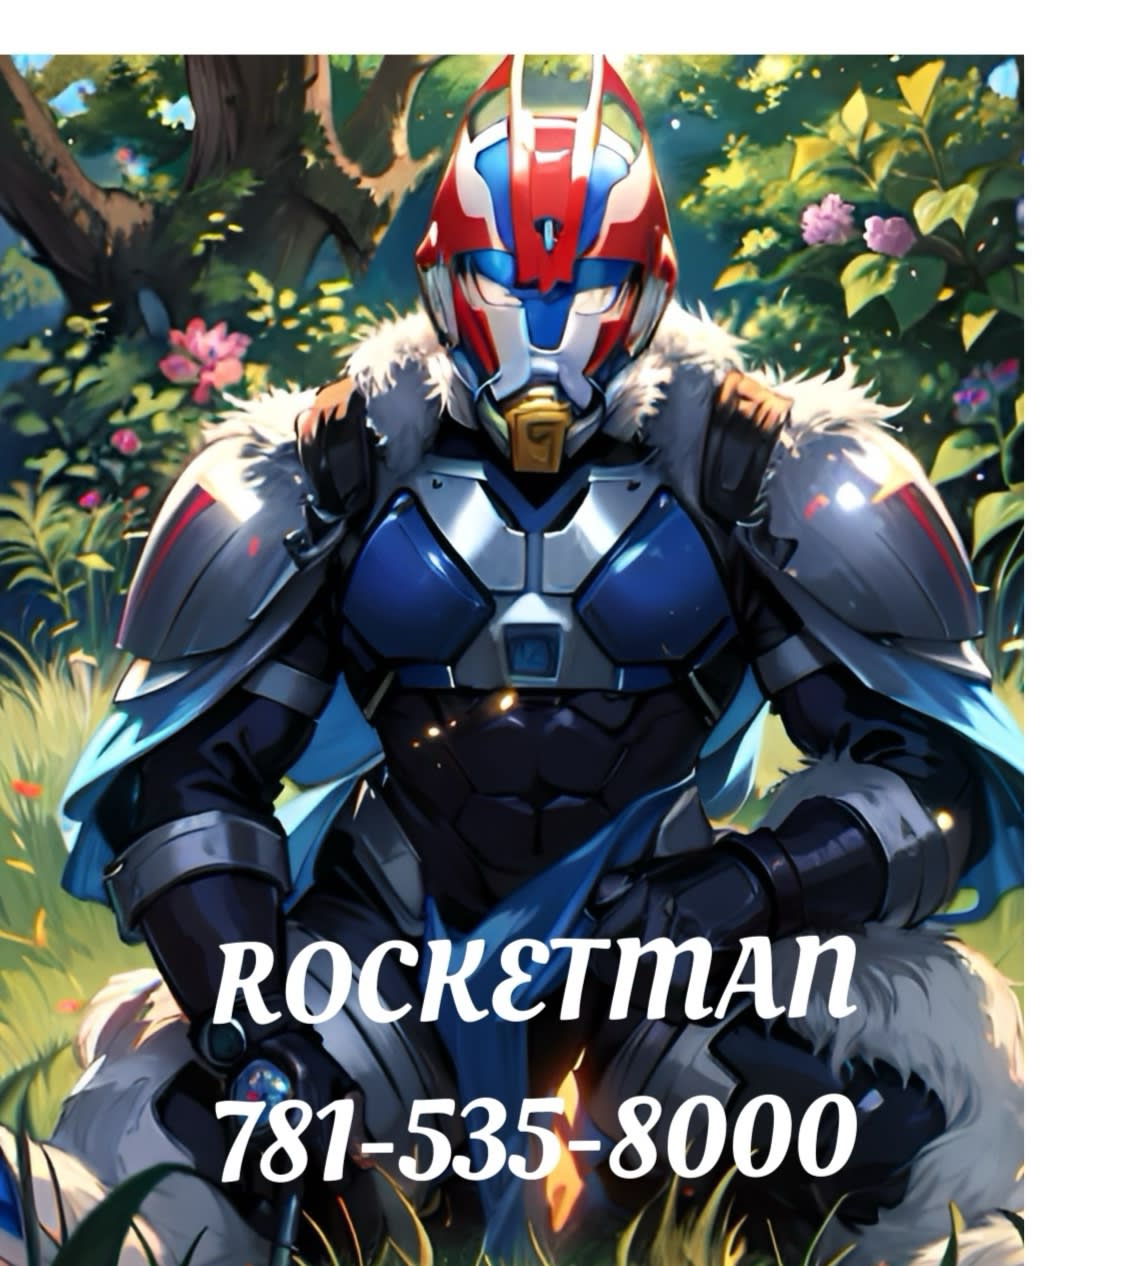 RocketMan USA